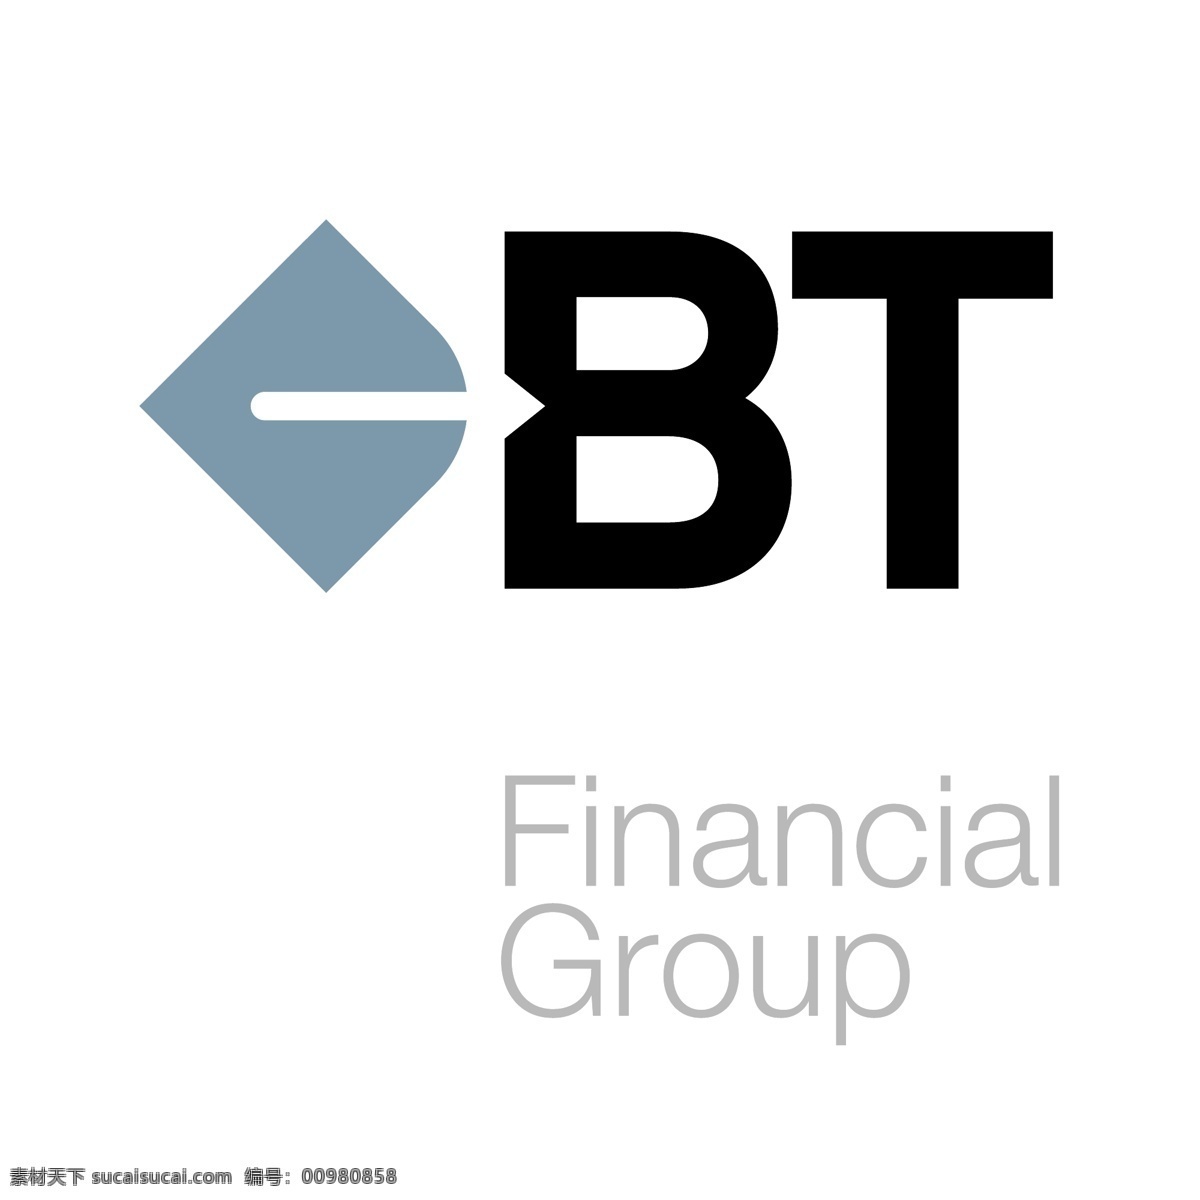 bt 金融 集团 金融集团 向量 联合 创意 世界 标志 载体 红细胞 世界金融集团 rbc 林肯 矢量图 建筑家居